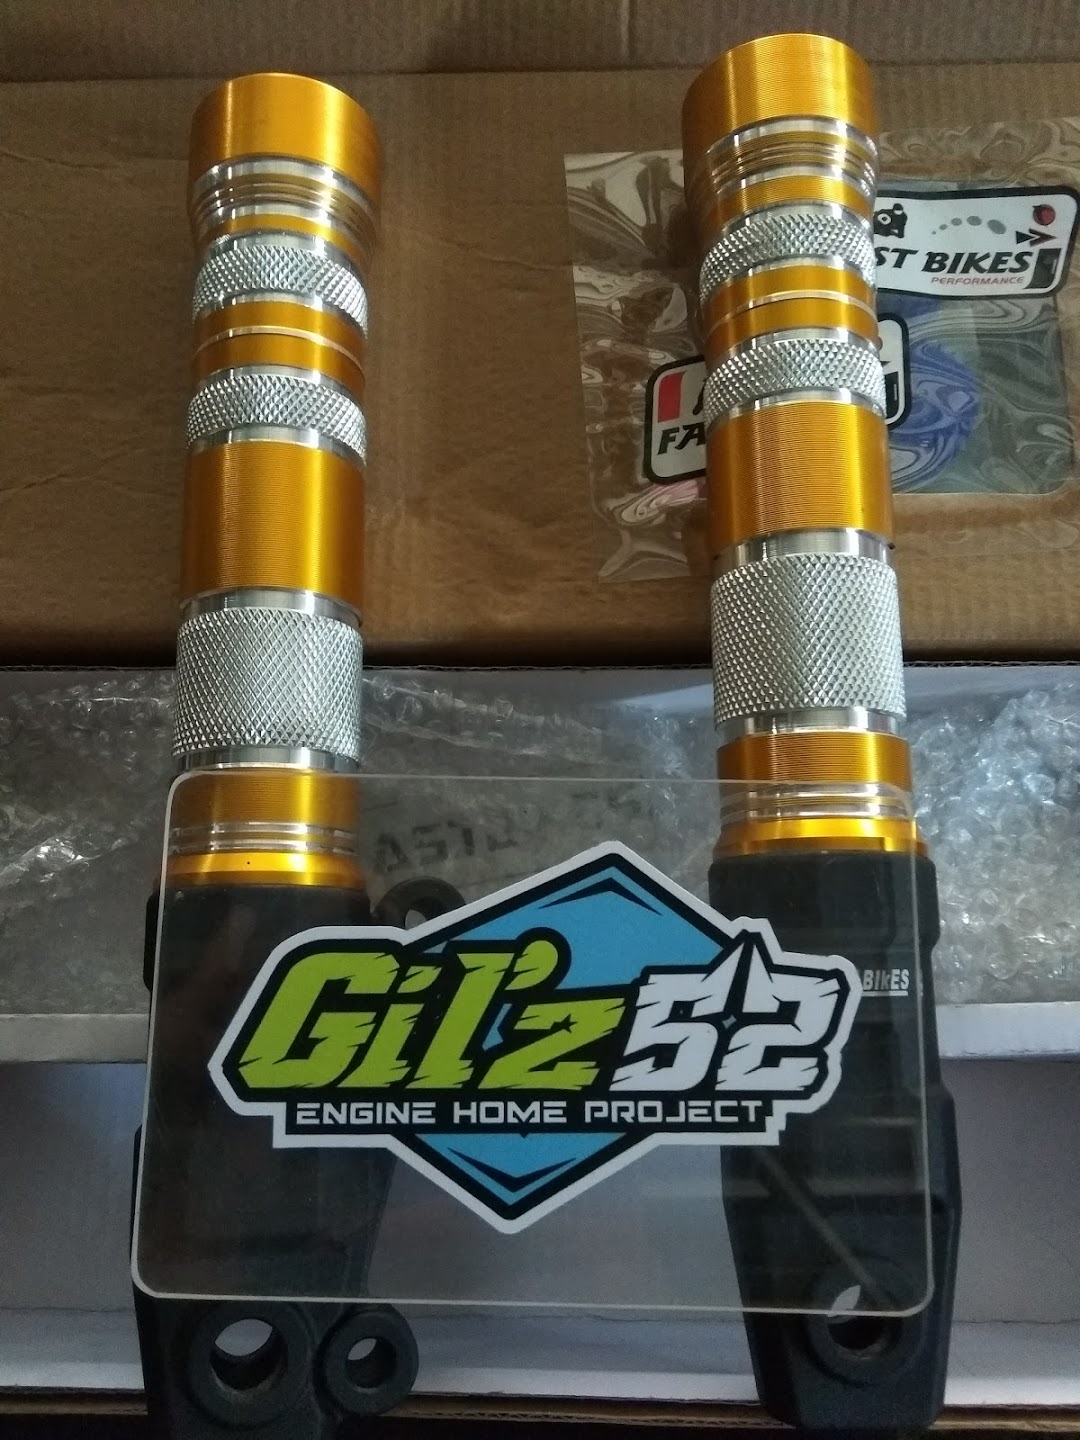 Gilz52 Engine Home Project